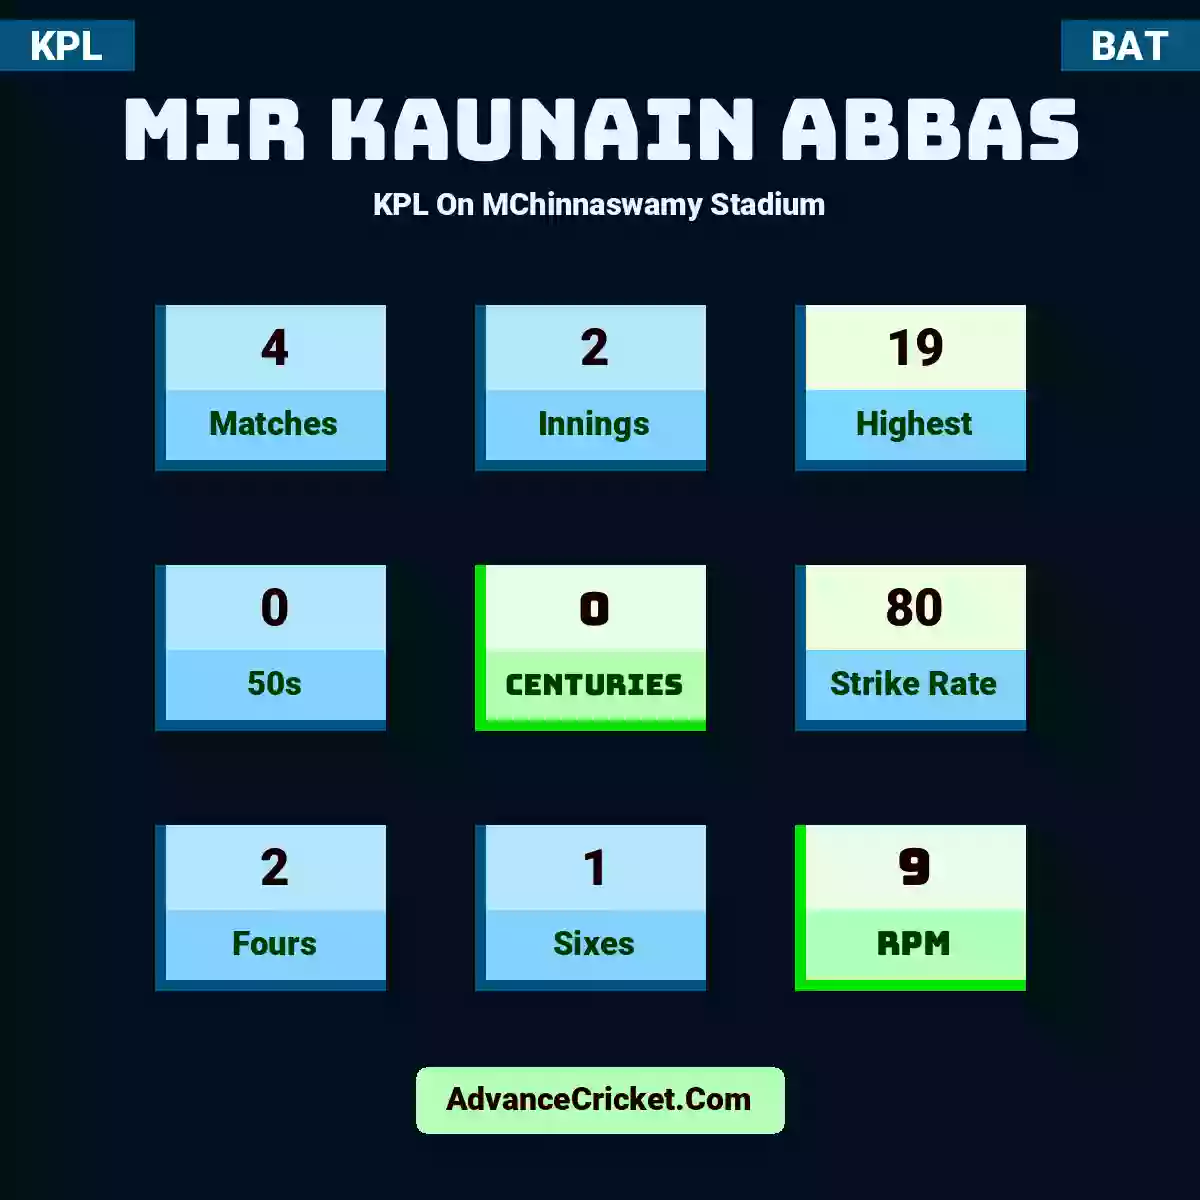 Mir Kaunain Abbas KPL  On MChinnaswamy Stadium, Mir Kaunain Abbas played 4 matches, scored 19 runs as highest, 0 half-centuries, and 0 centuries, with a strike rate of 80. M.Abbas hit 2 fours and 1 sixes, with an RPM of 9.